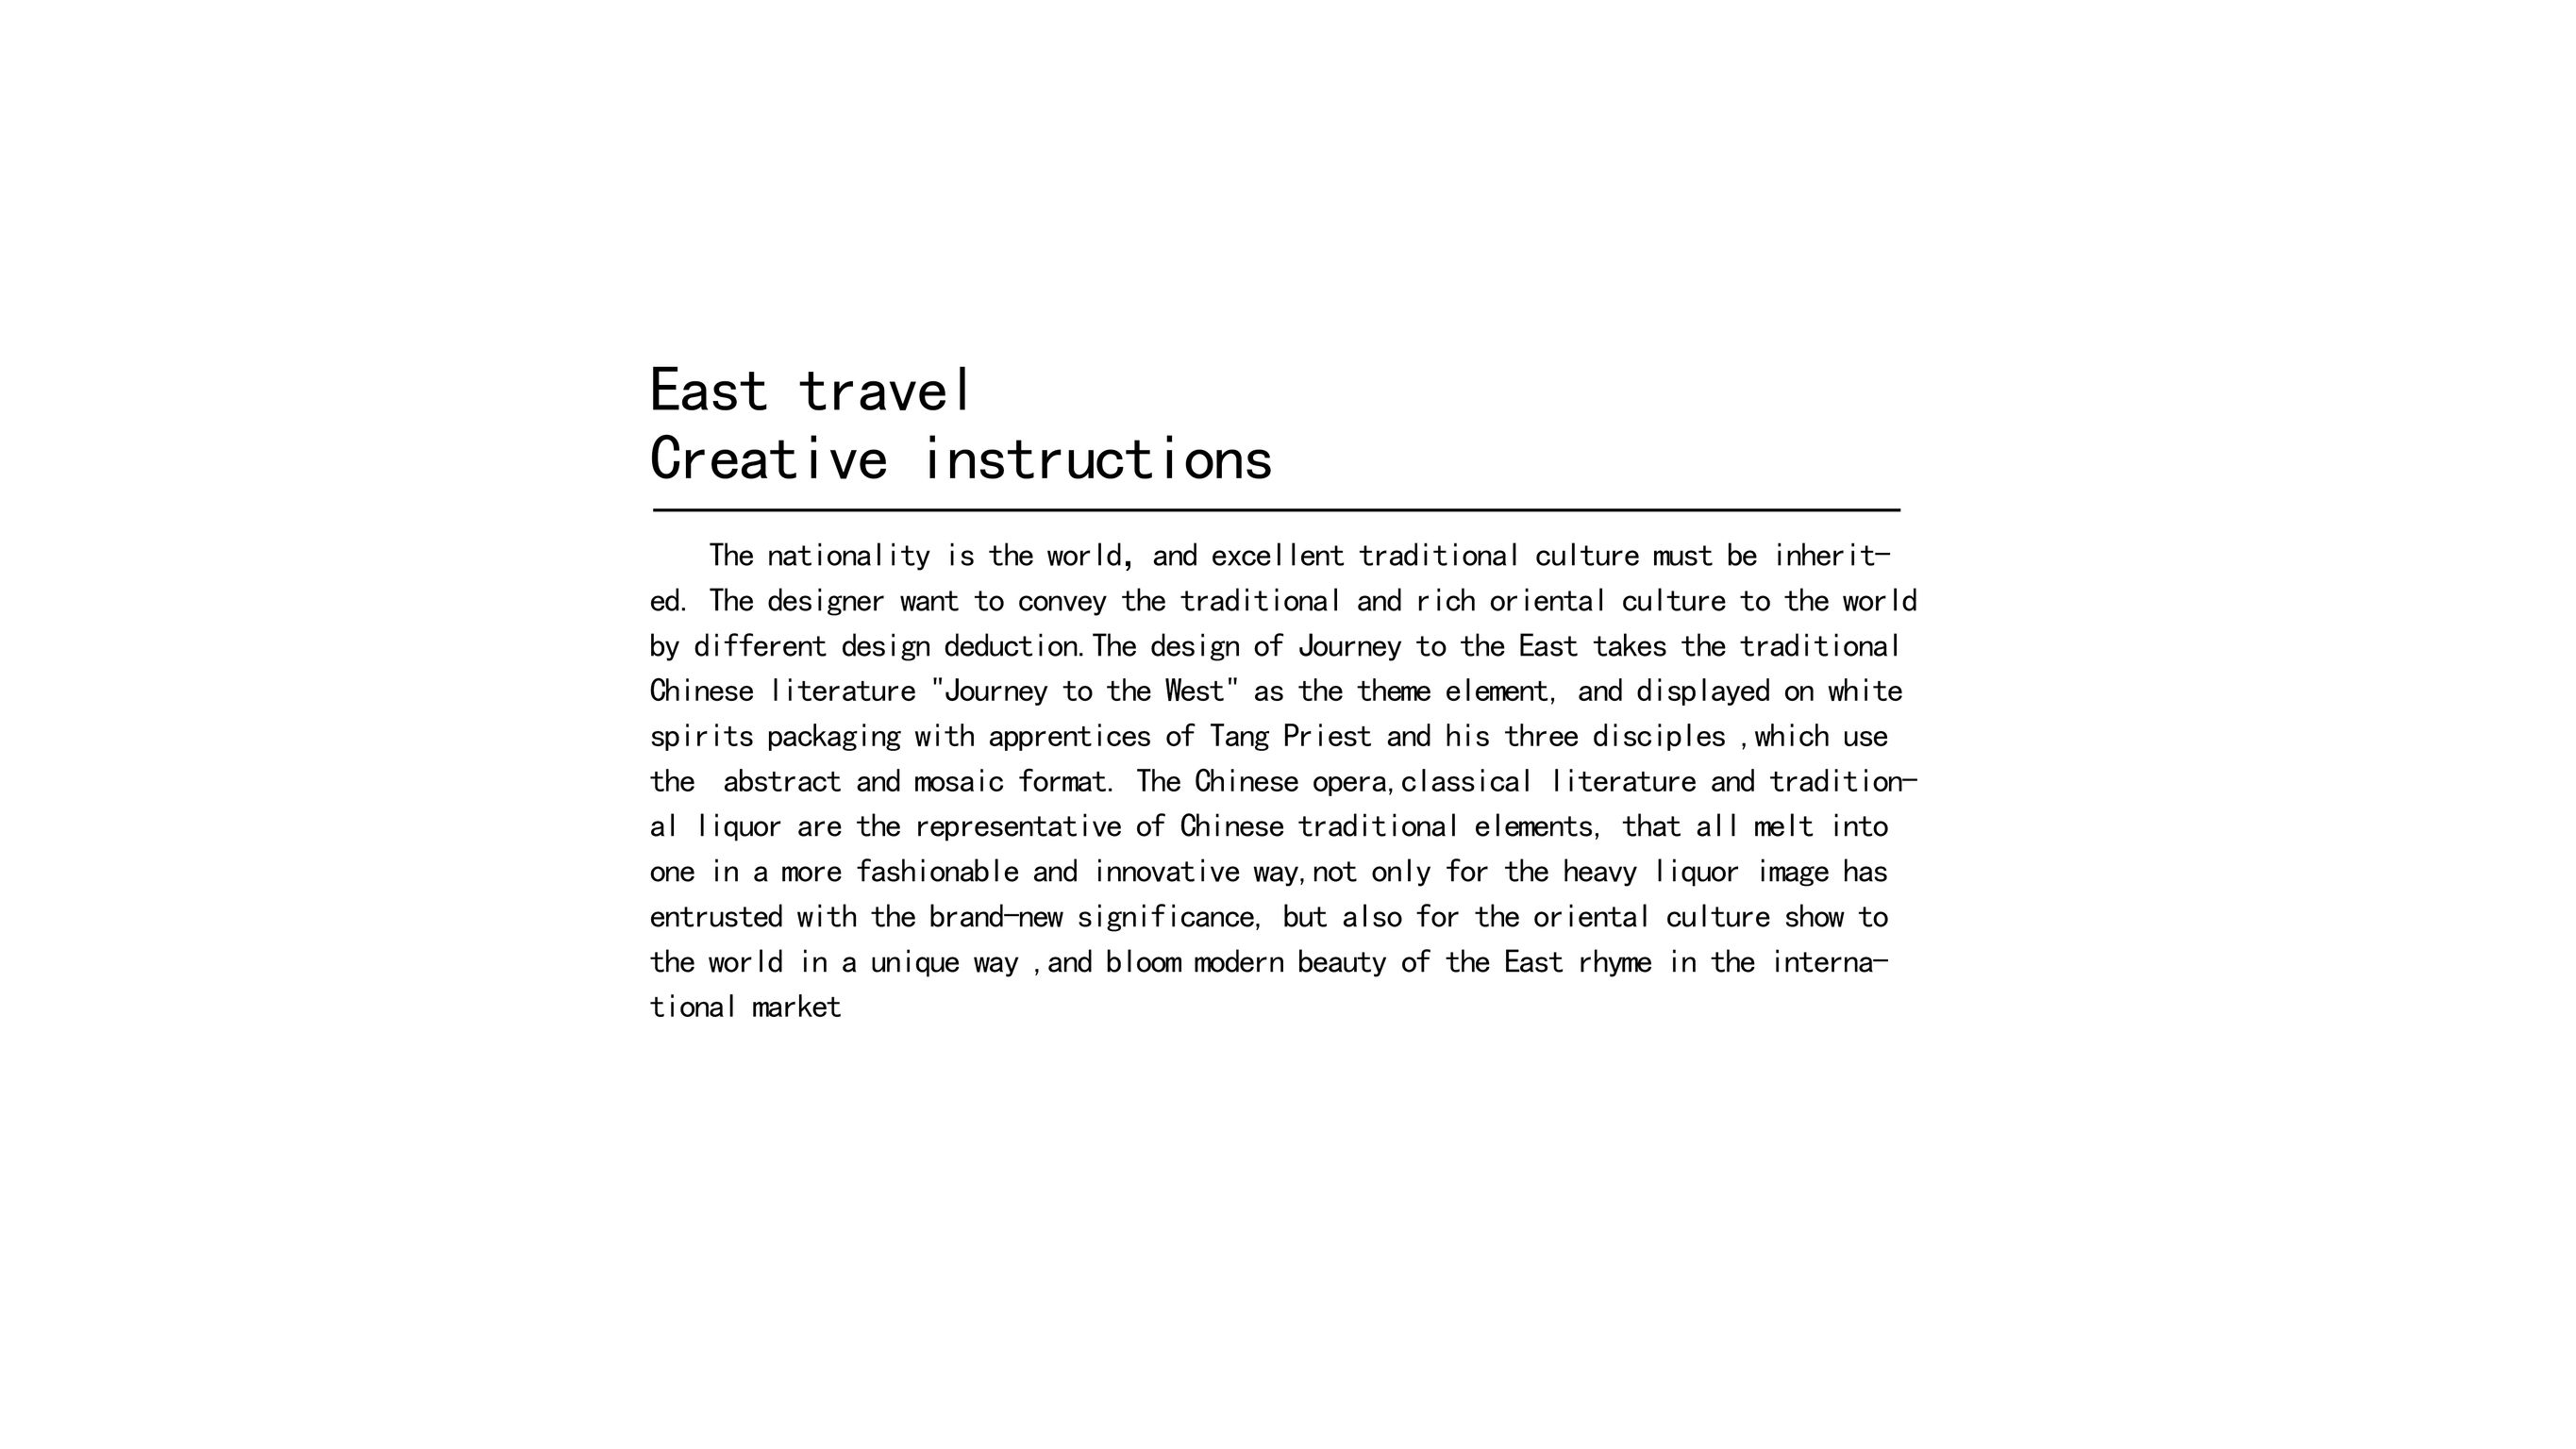 East travel